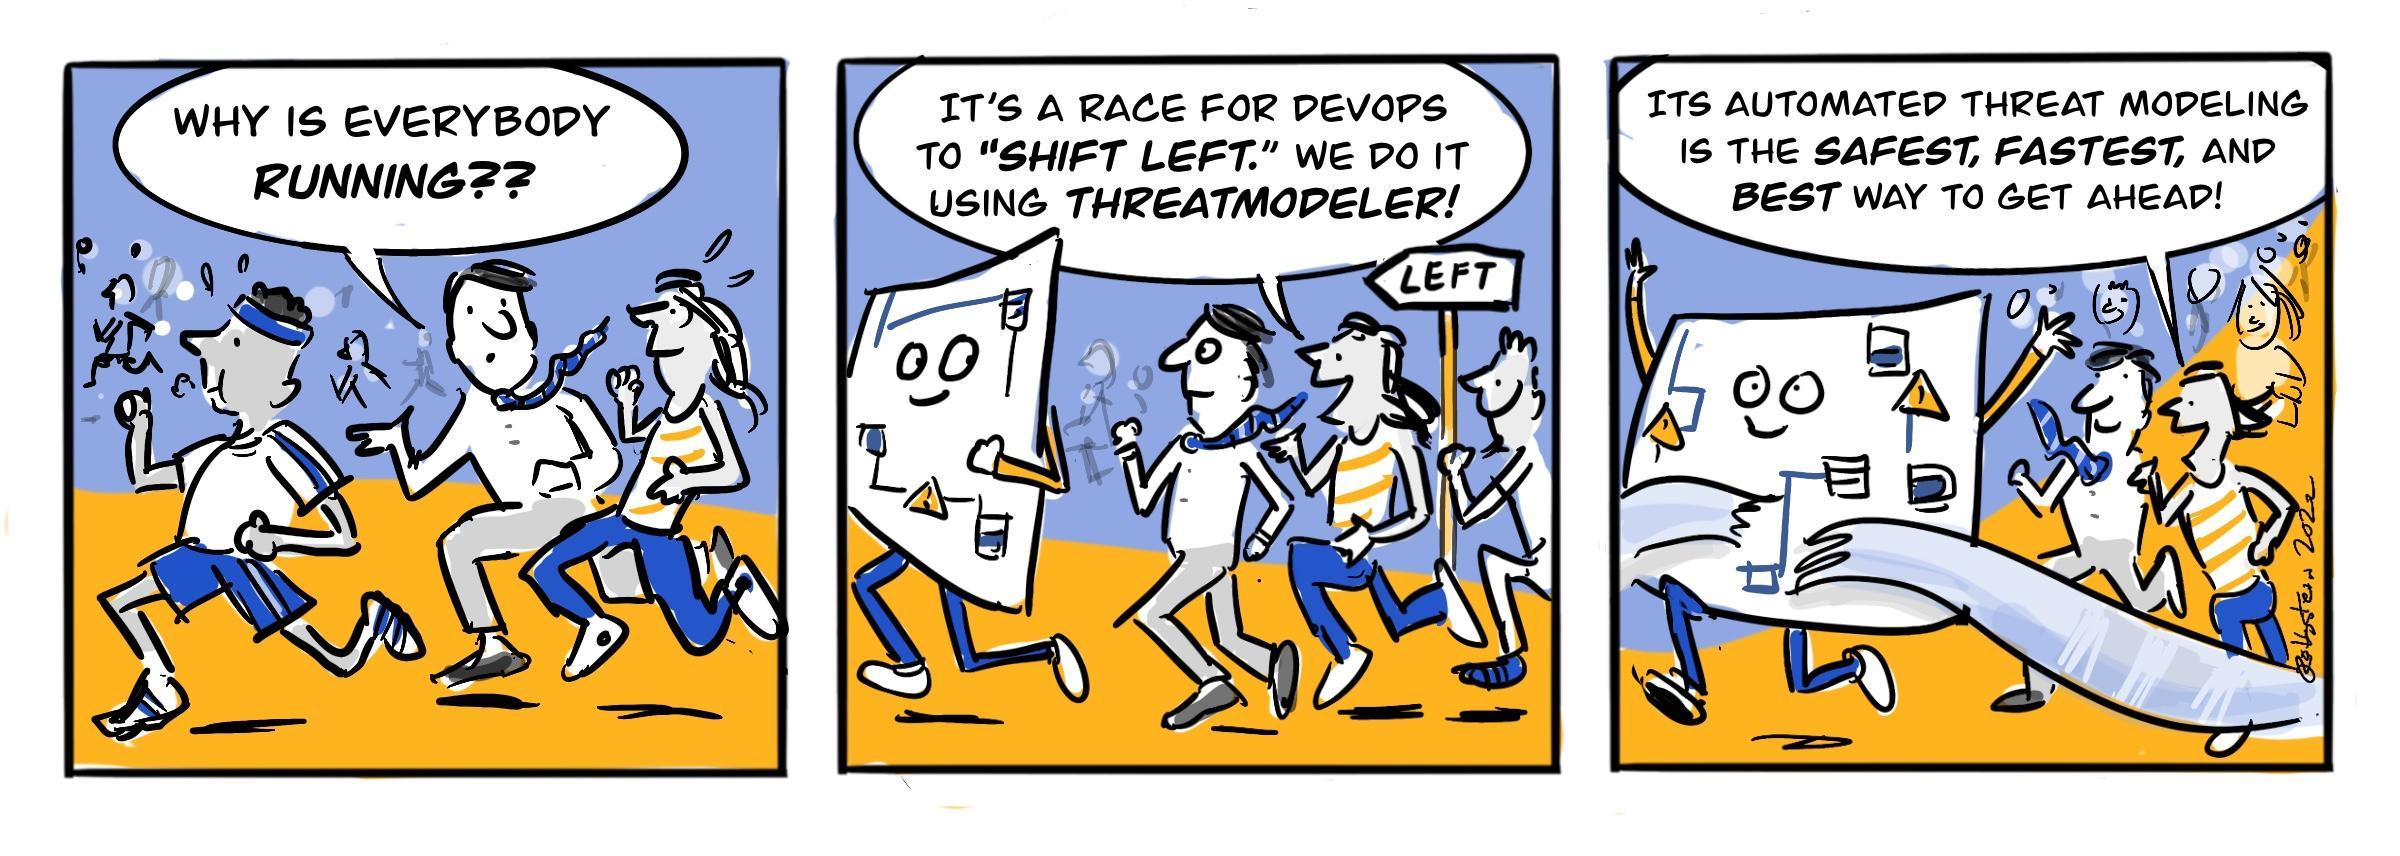 Three panel cartoon about shifting left